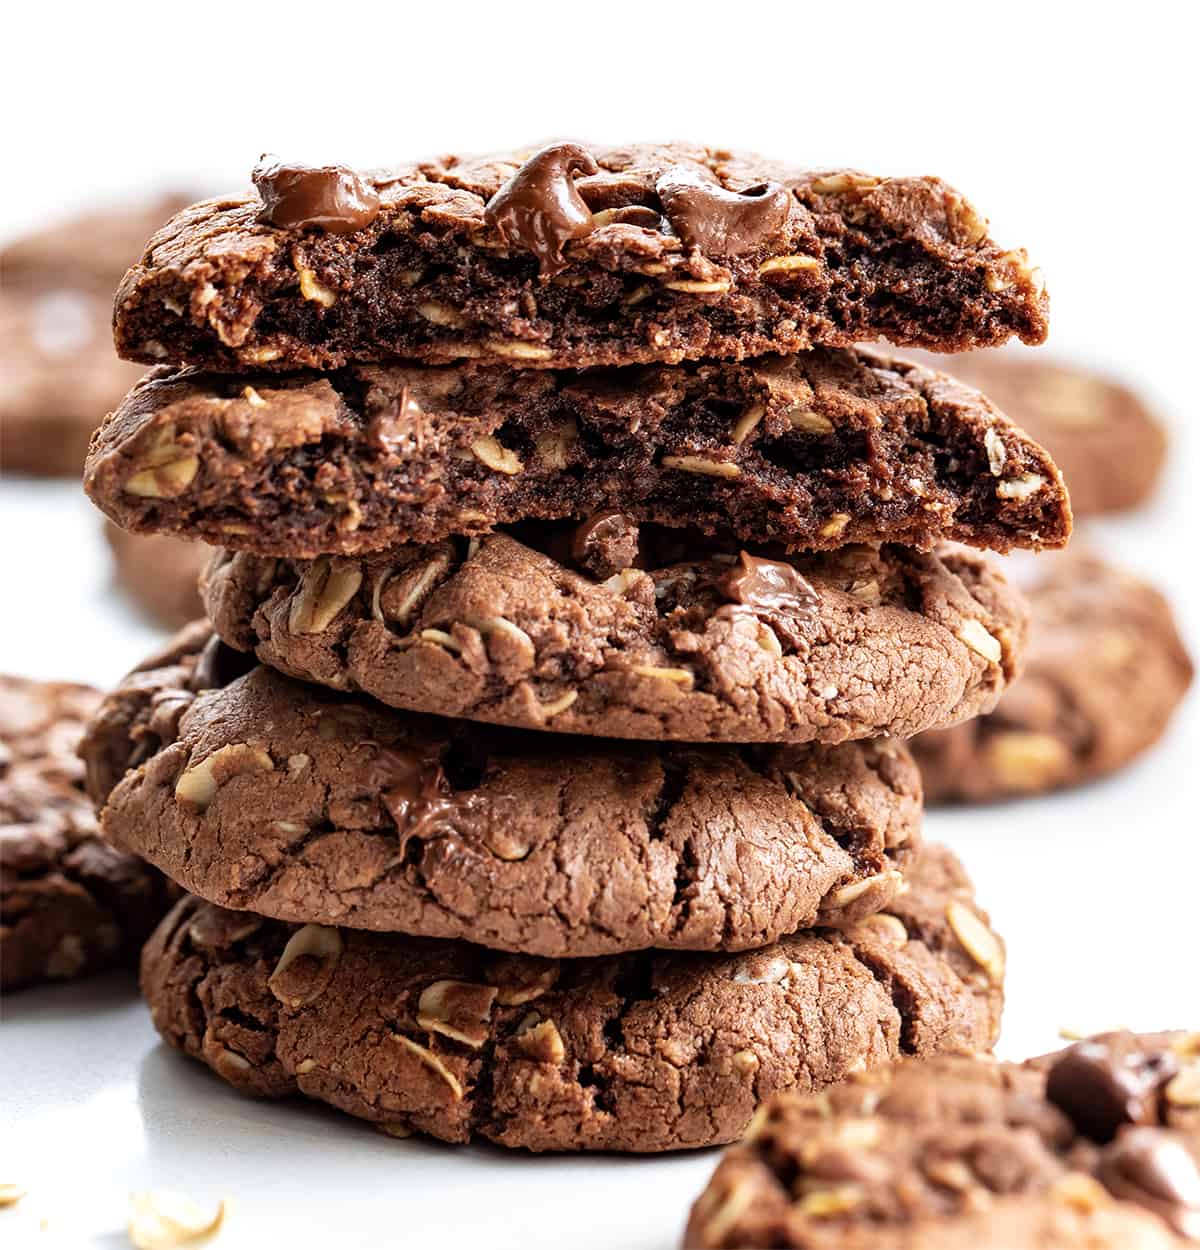 Stack of Chocolate Oatmeal Cookies with Top Cookie Broken in Half.